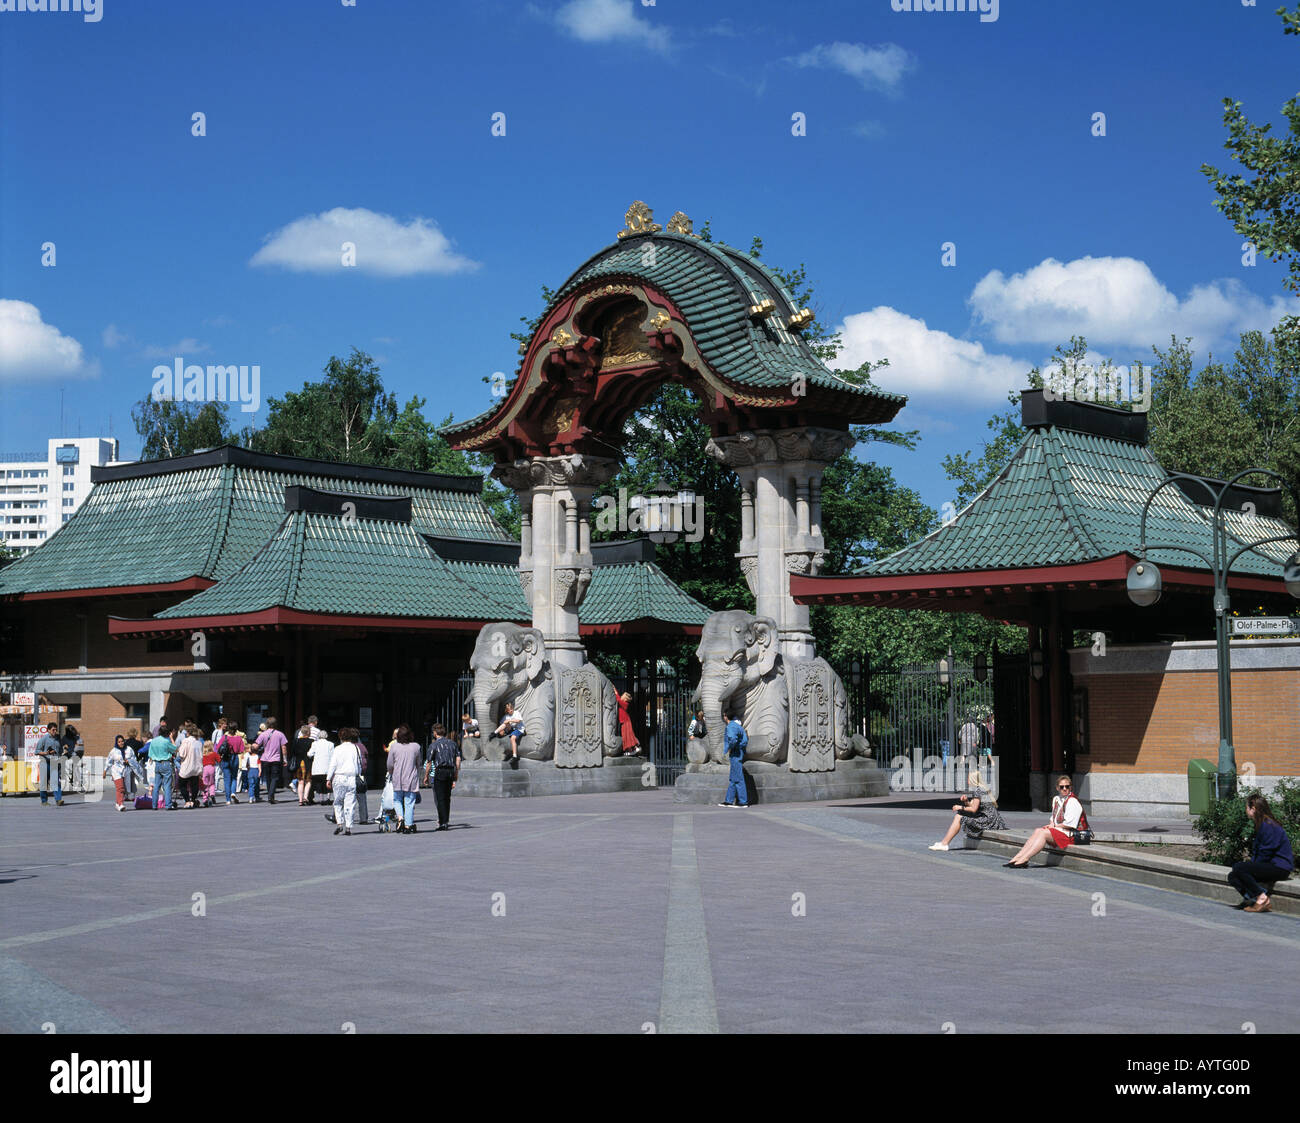 Touristen bin Eingang Zum Zoo, Zoologischer Garten, Tierpark, Tiergarten, Elefantenfiguren am Eingangsportal, Berlin Stockfoto